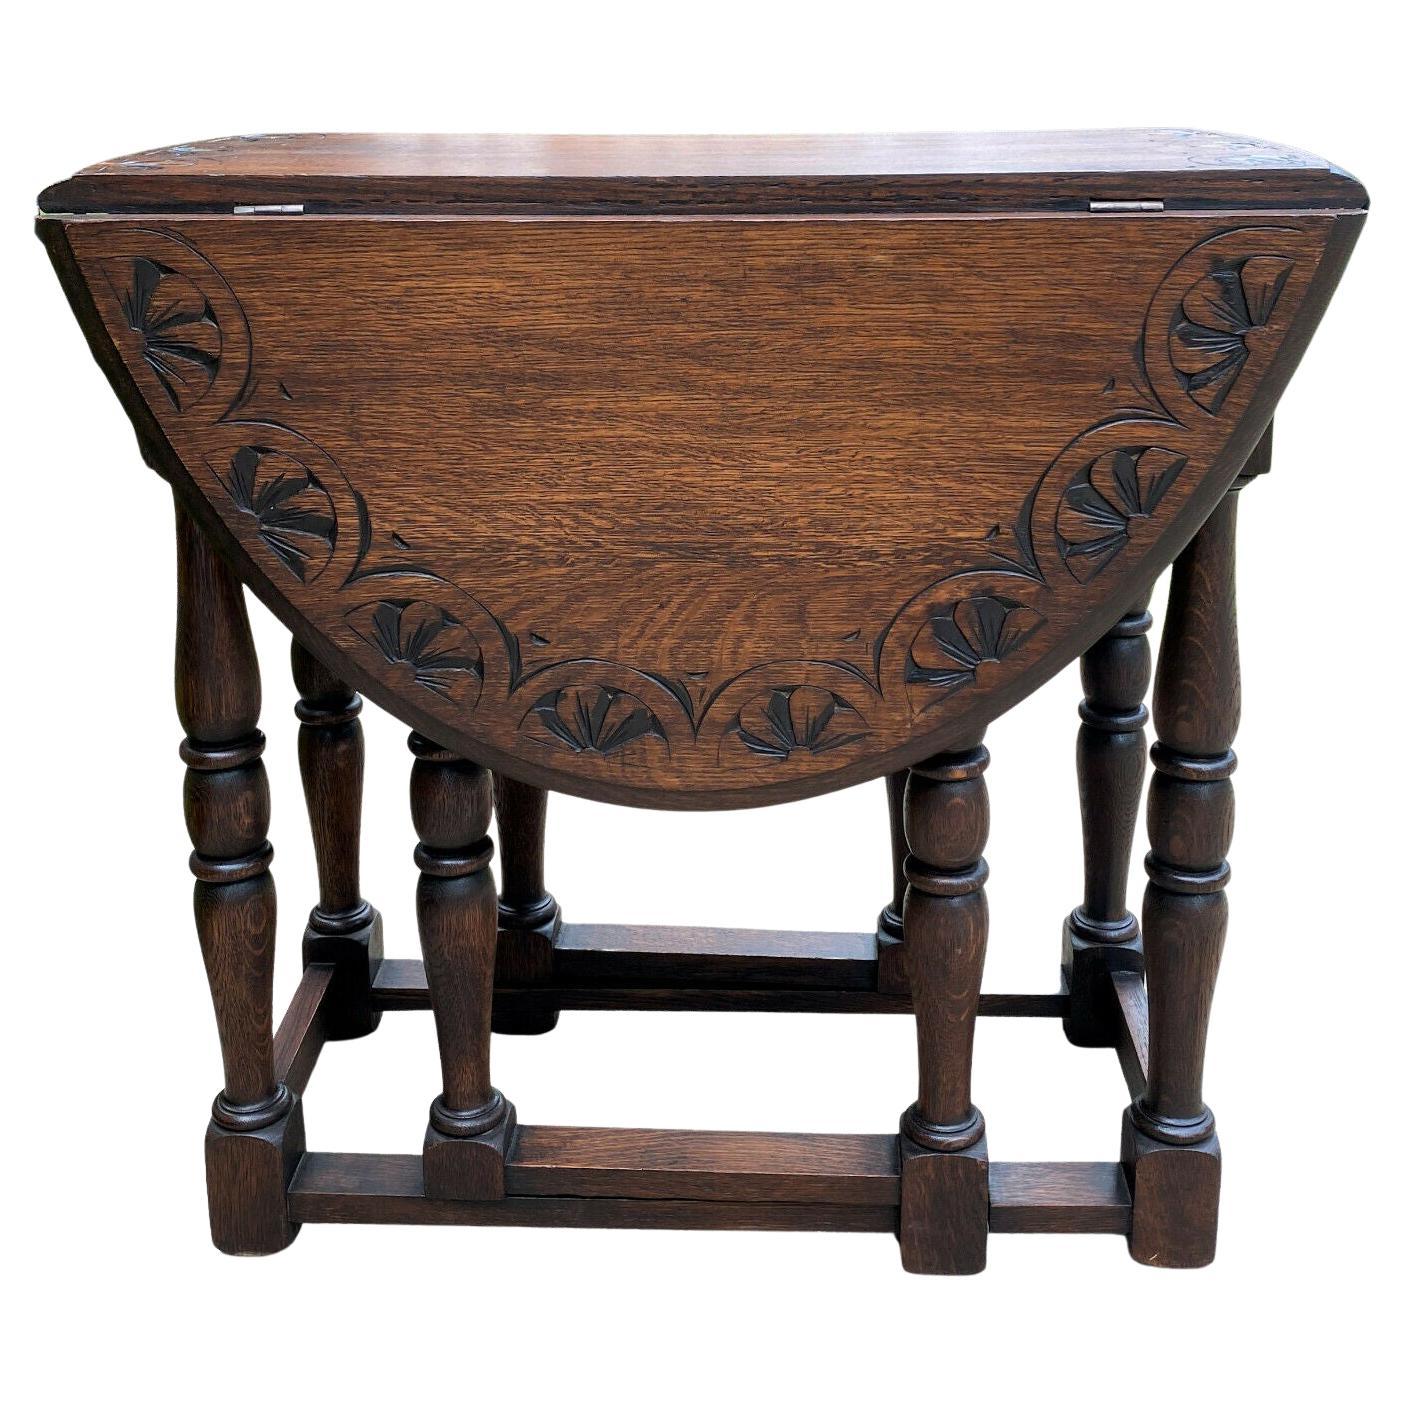 Antique English Table Drop Leaf Gateleg Turned Post Legs Oval Oak Carved Top